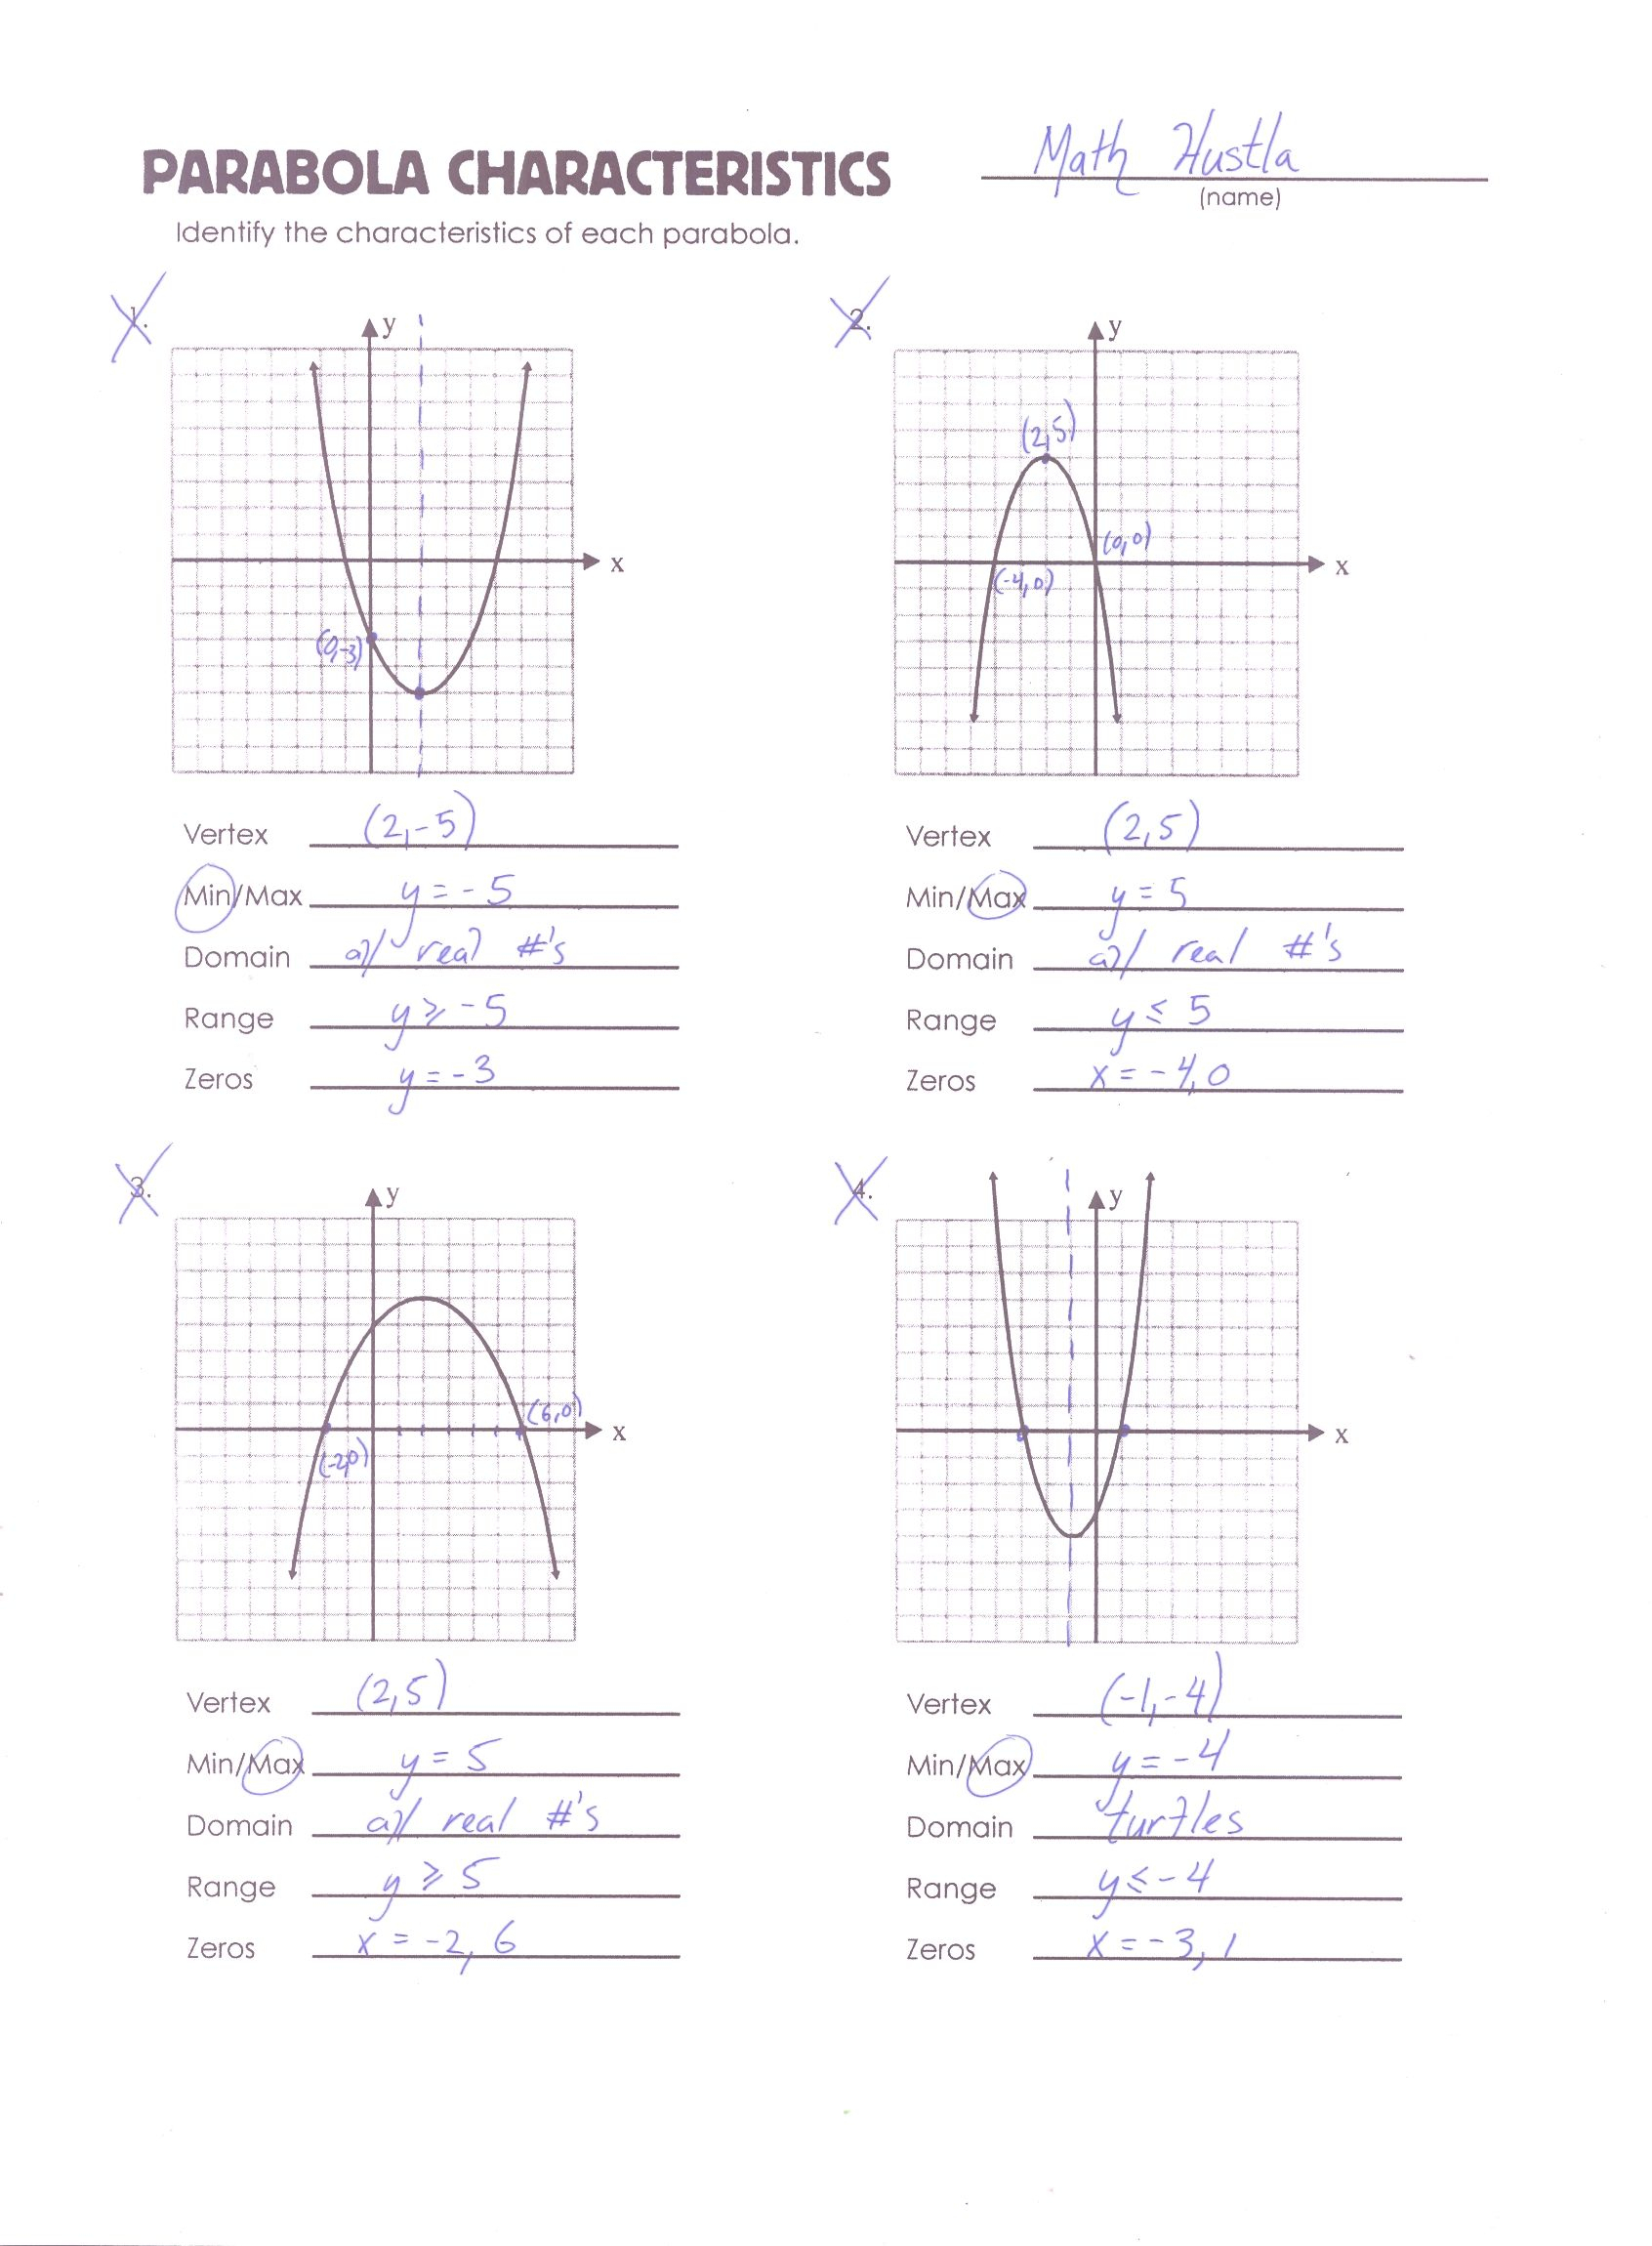 Graphing Quadratic Functions Worksheet Answer Key Algebra 1 Algebra 